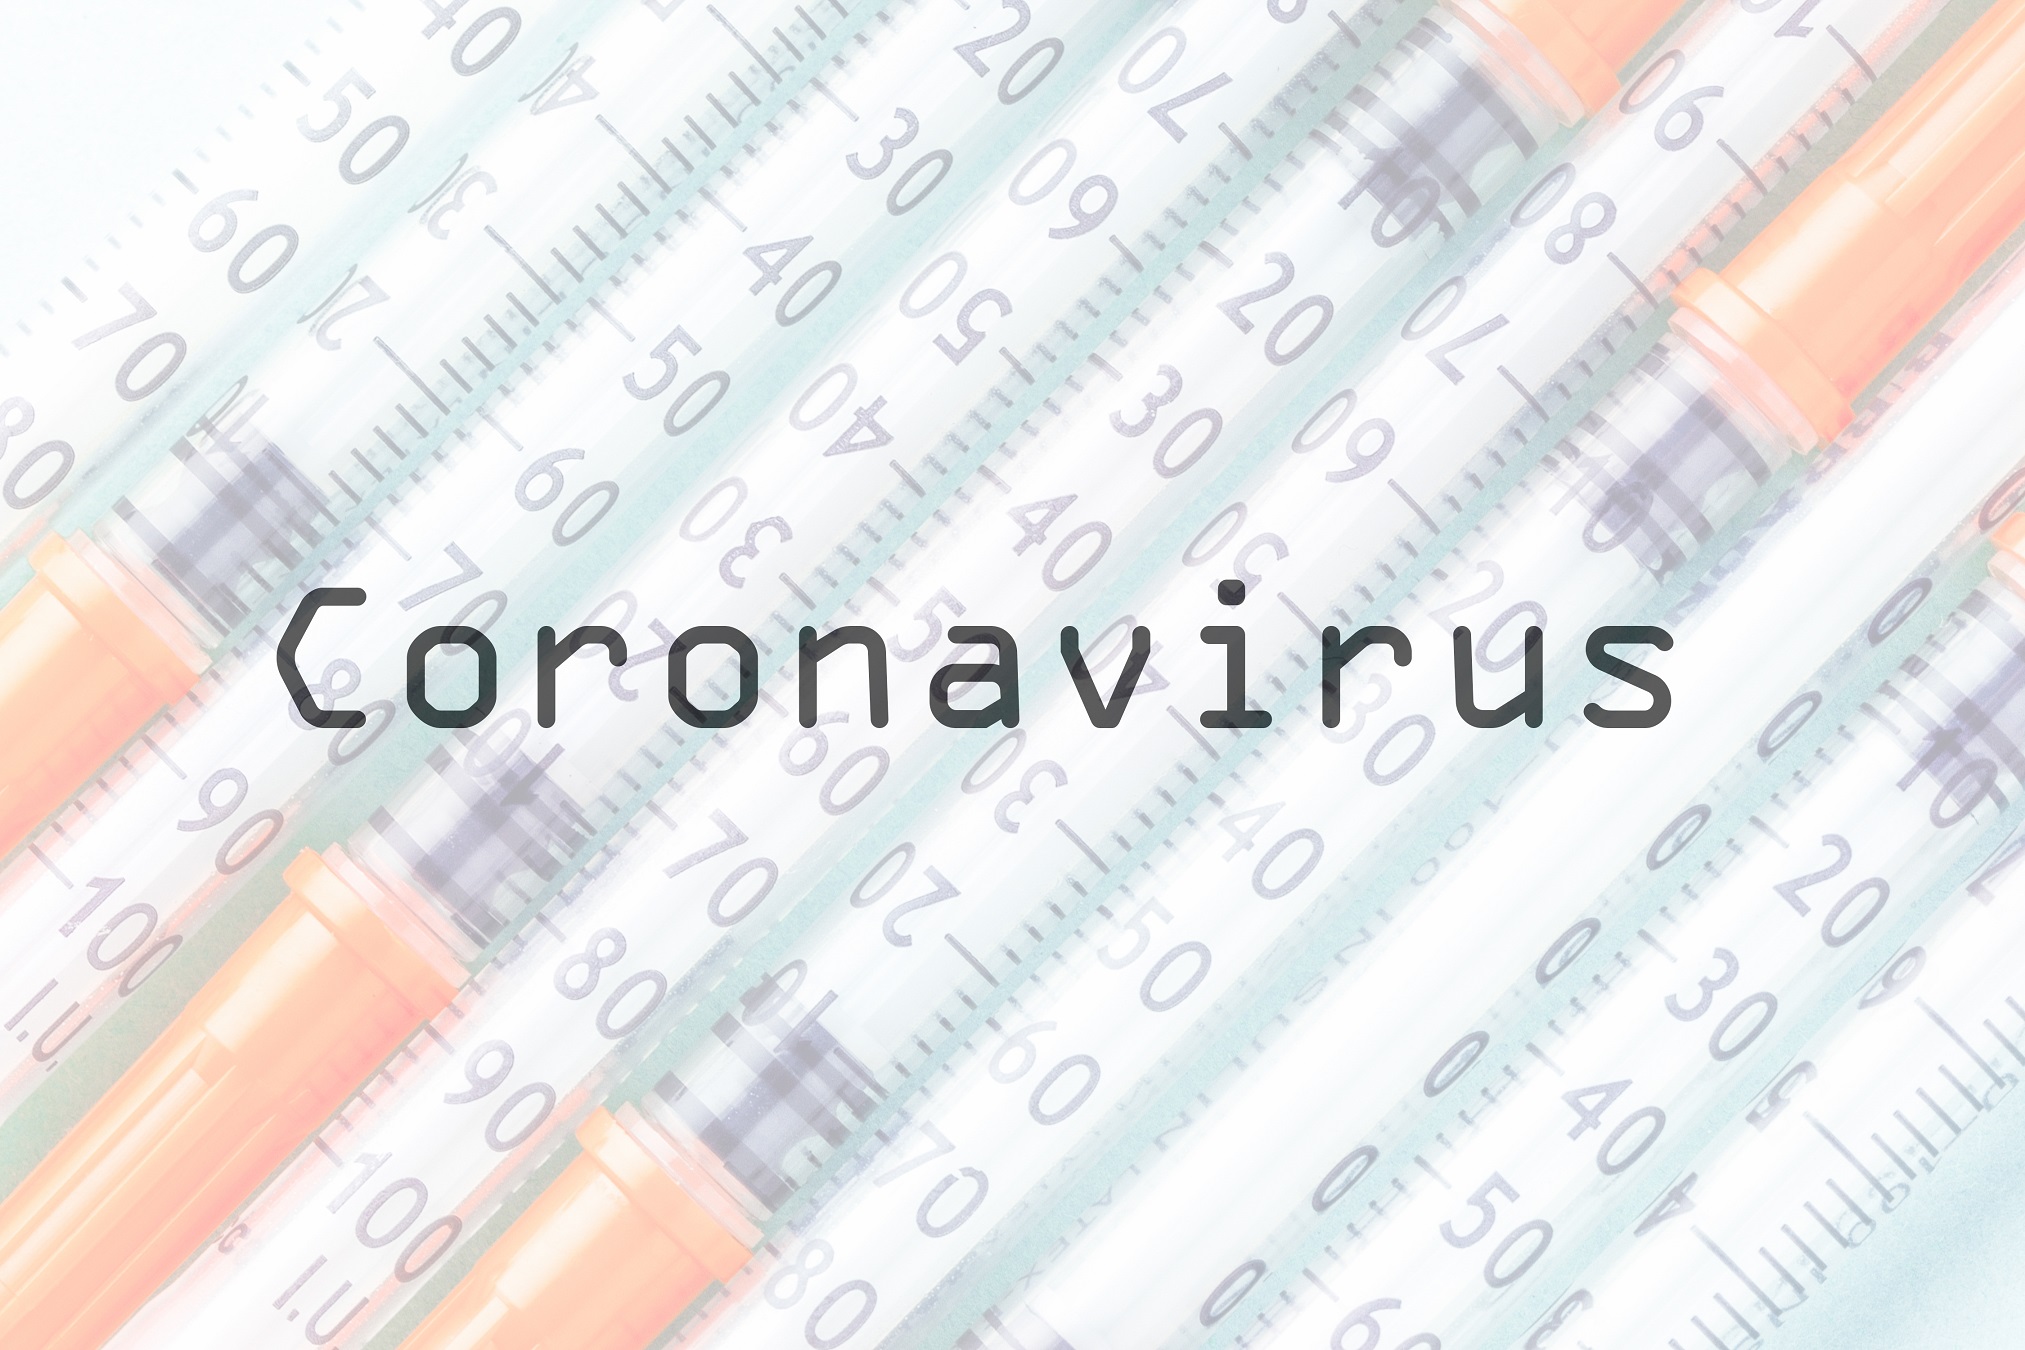 Coronavirus Reggio